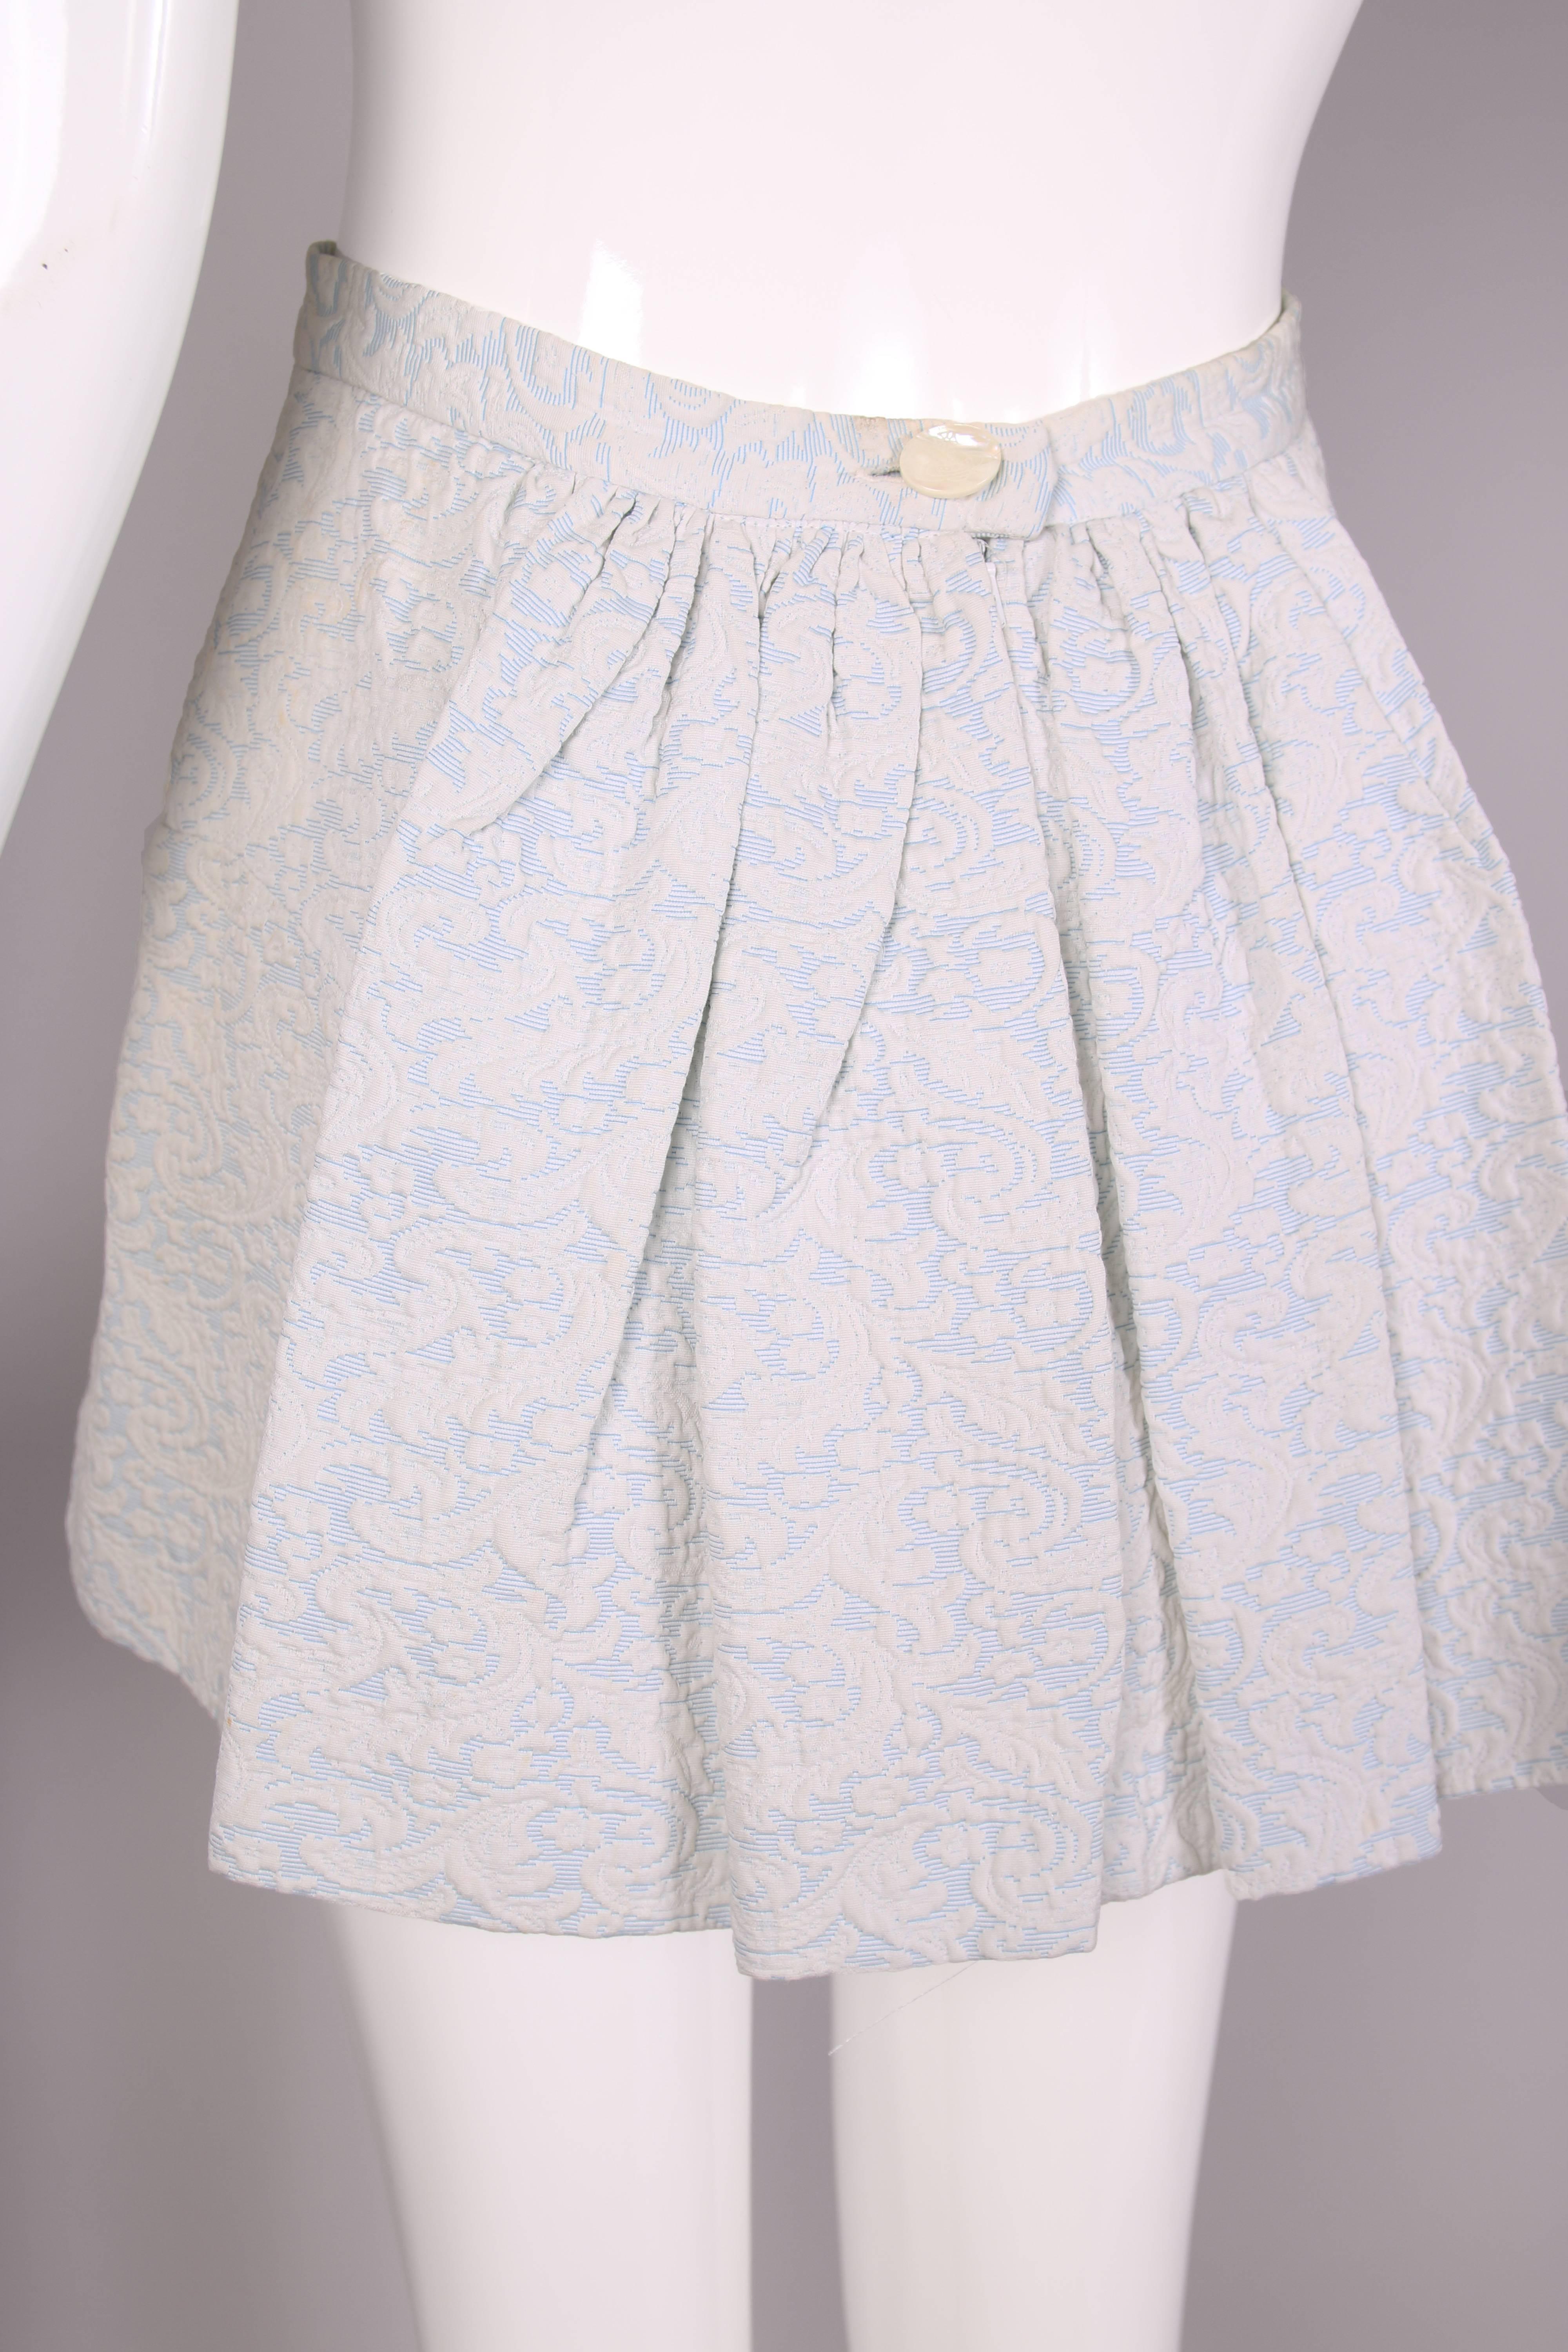 Vivienne Westwood Blue & White Jacquard Mini Skirt W/Bustle Back Ca. 1998 For Sale 1